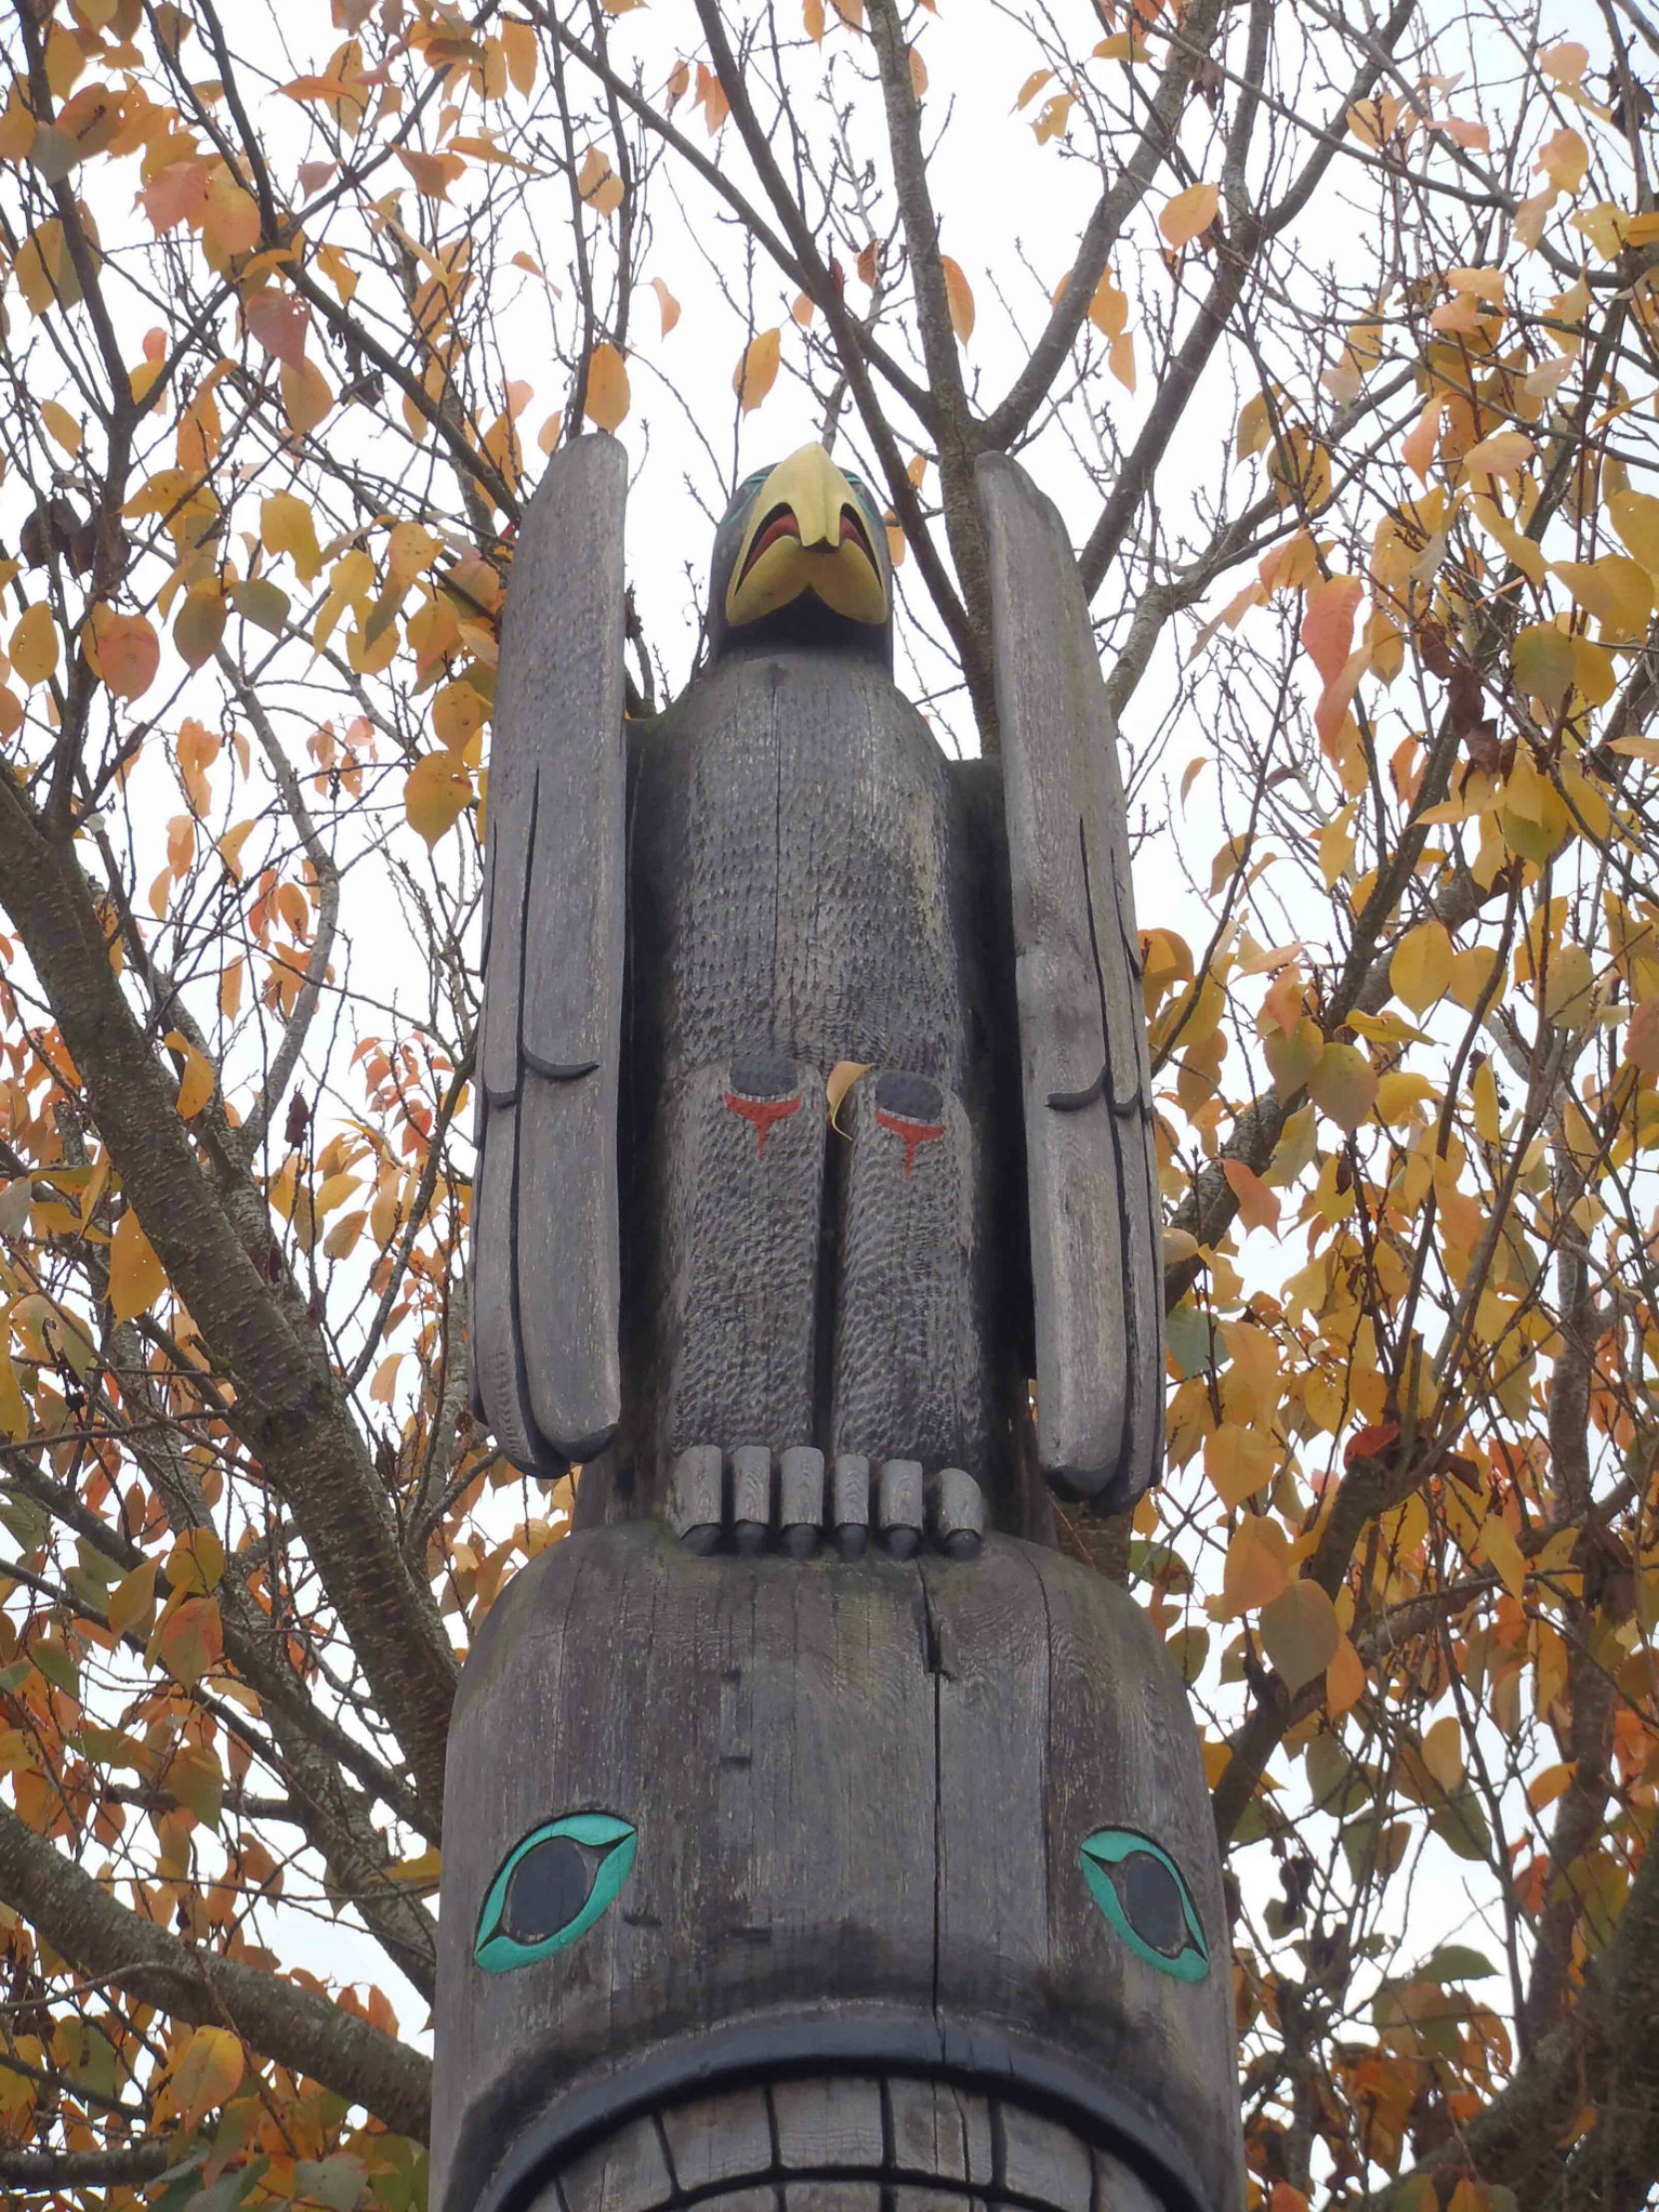 Nhe-is-bik Salmon Pole. Chief Wahkus. Oweekanos. Thunderbird